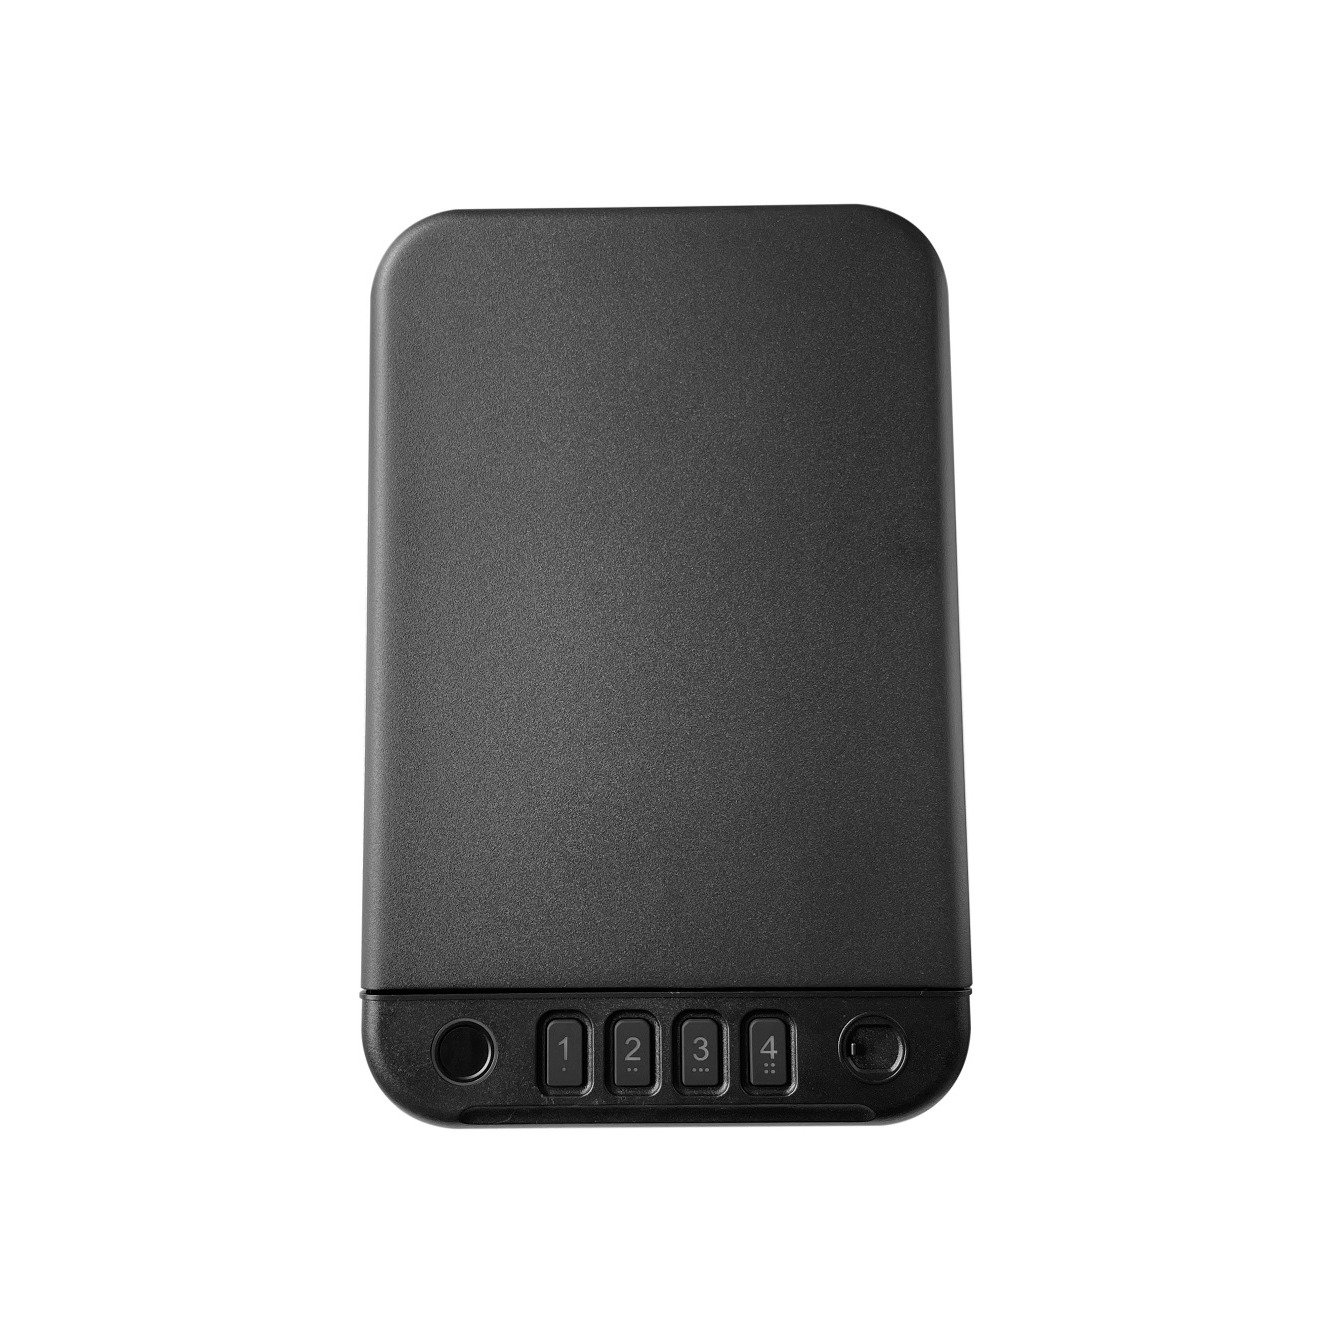 Cofre Smart Safewell - Mod Ps0101f C/ Biometria